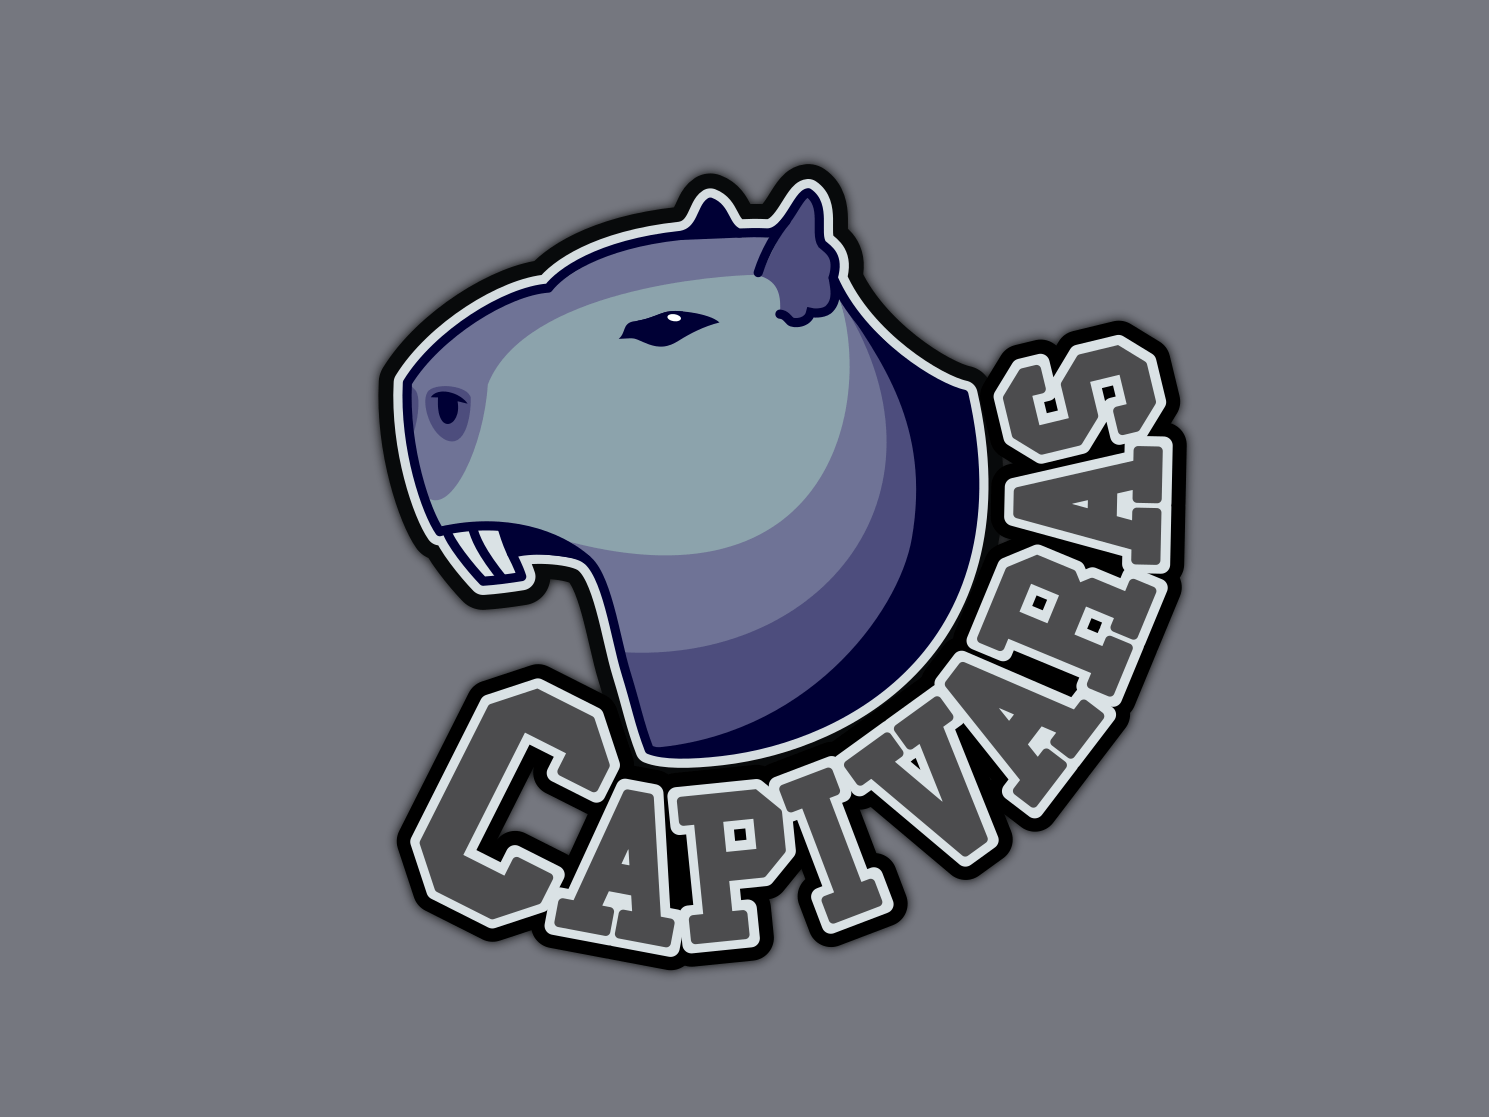 Horseshoe Team Logo - Capivaras Dev Team Logo by Stéfano Stypulkowski Zanata | Dribbble ...